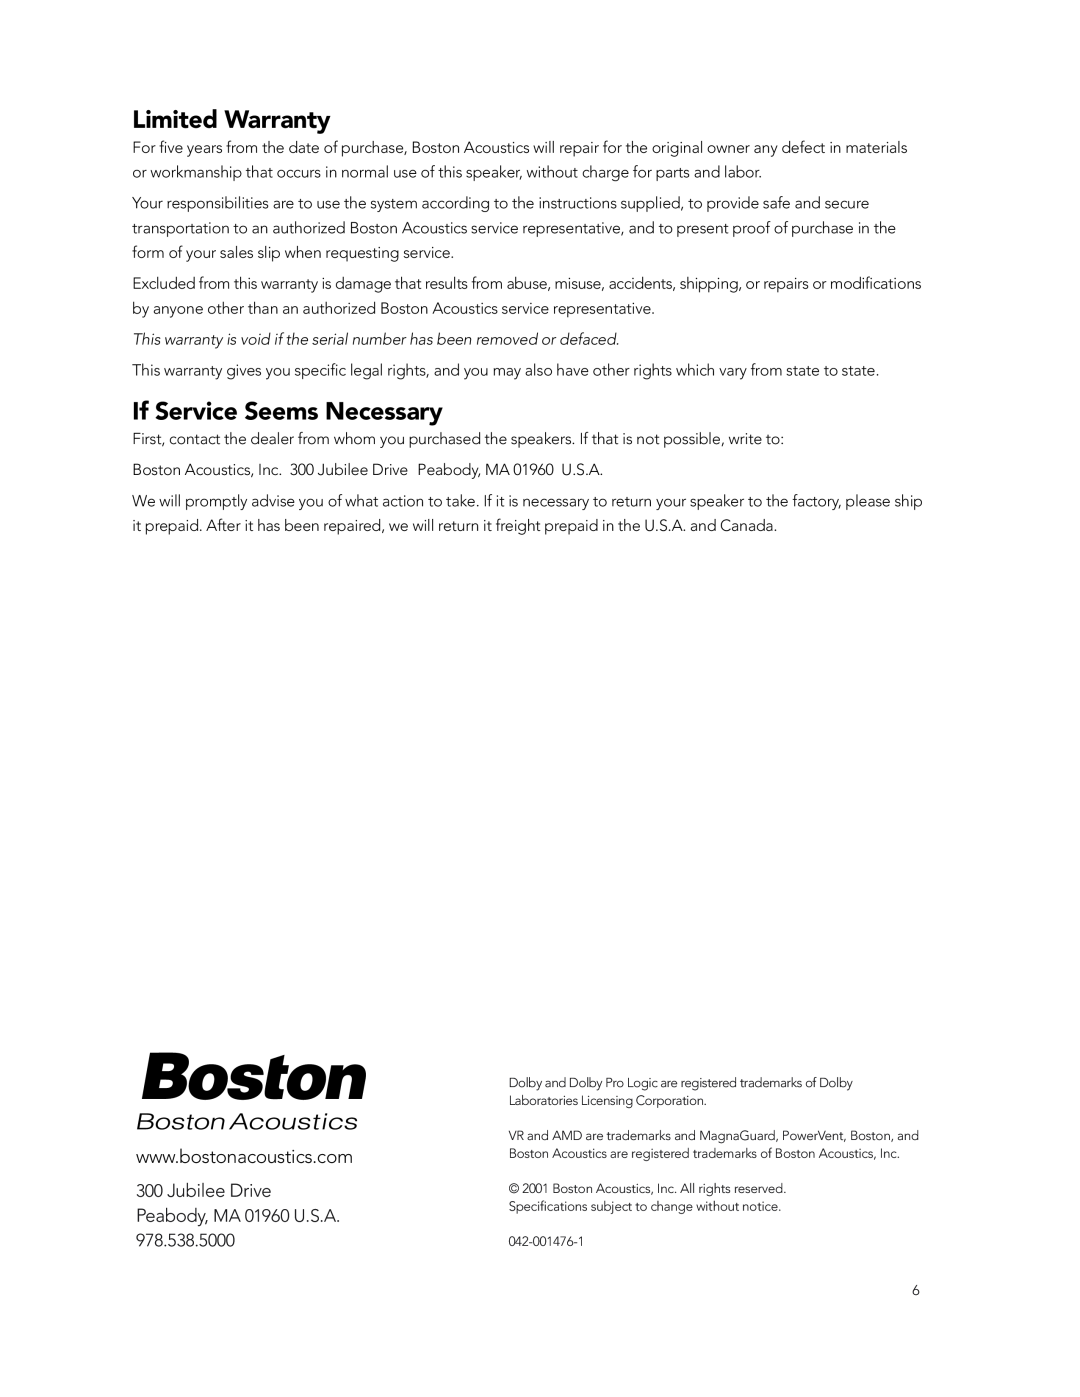 Boston Acoustics Center Channel Speaker manual Limited Warranty, If Service Seems Necessary, Peabody, MA 01960 U.S.A 